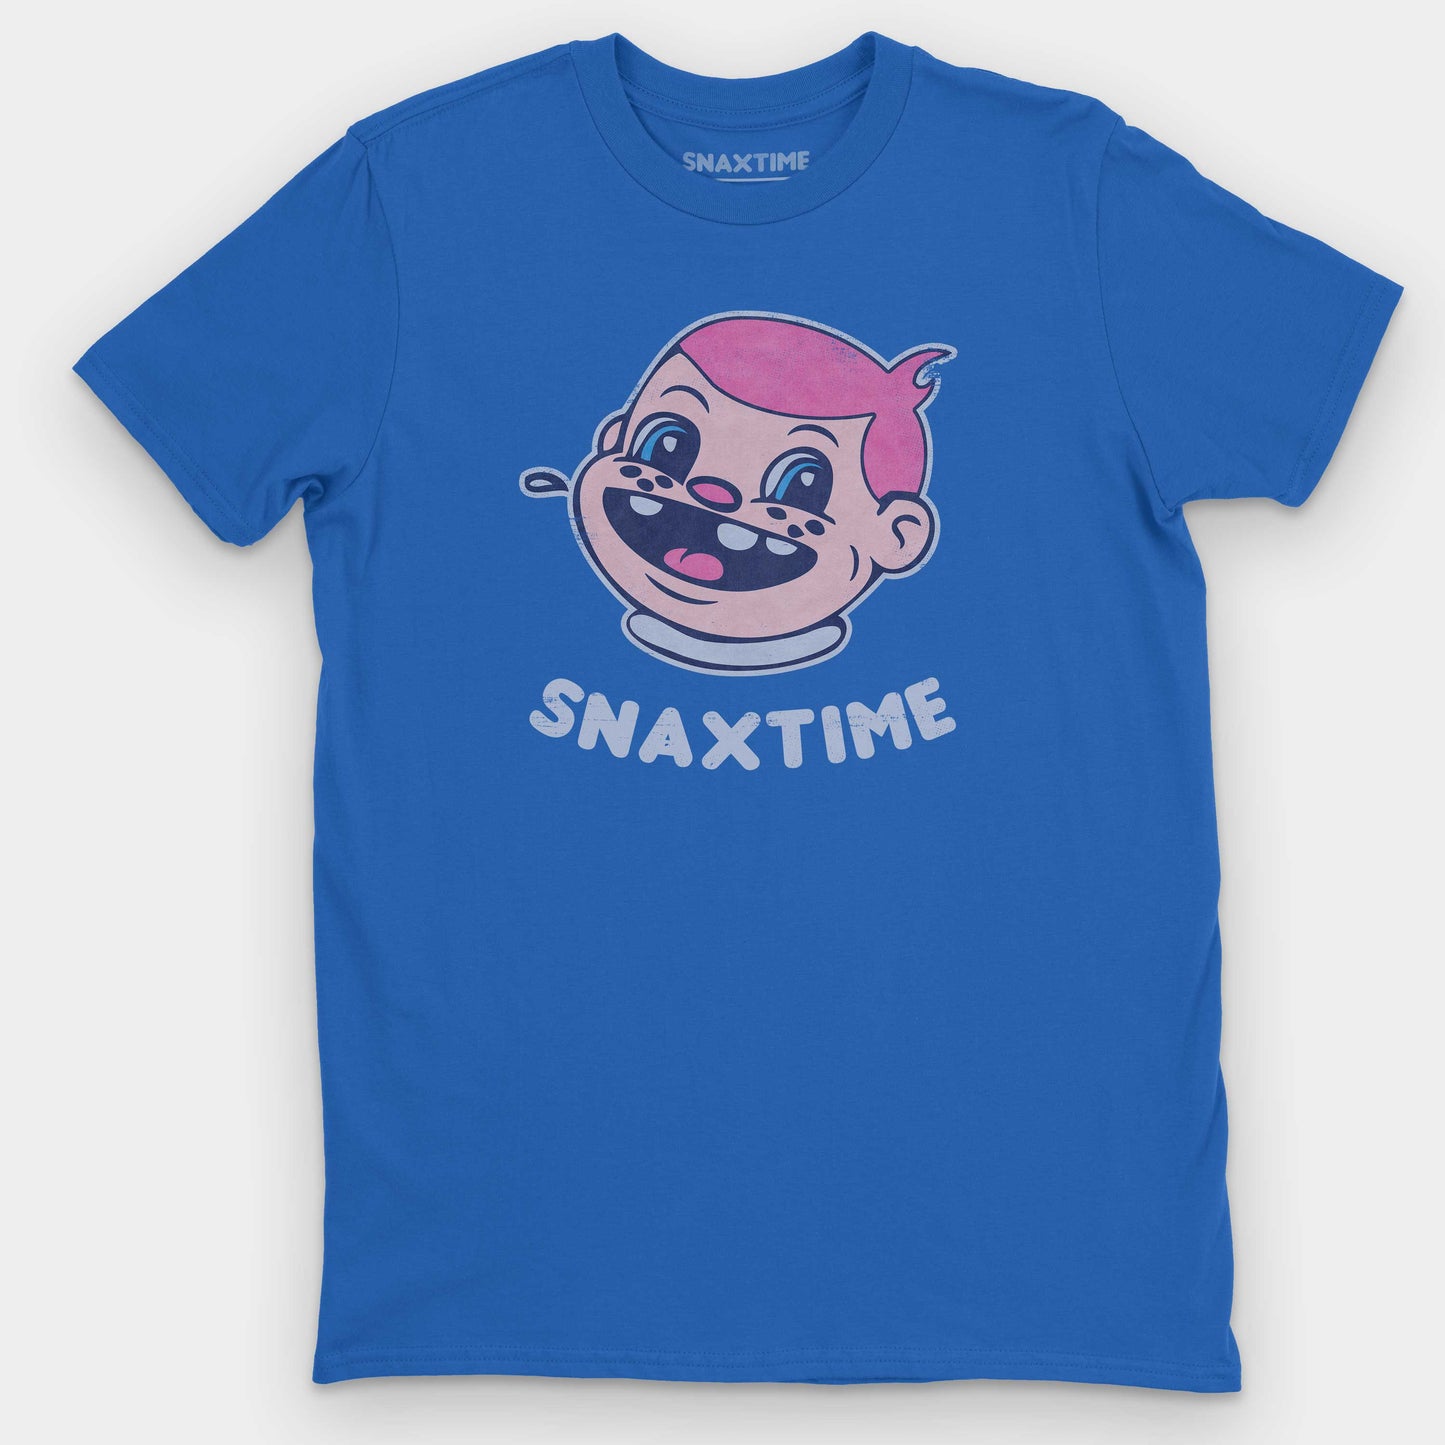 Royal Blue Snaxtime Original Graphic T-Shirt by Snaxtime